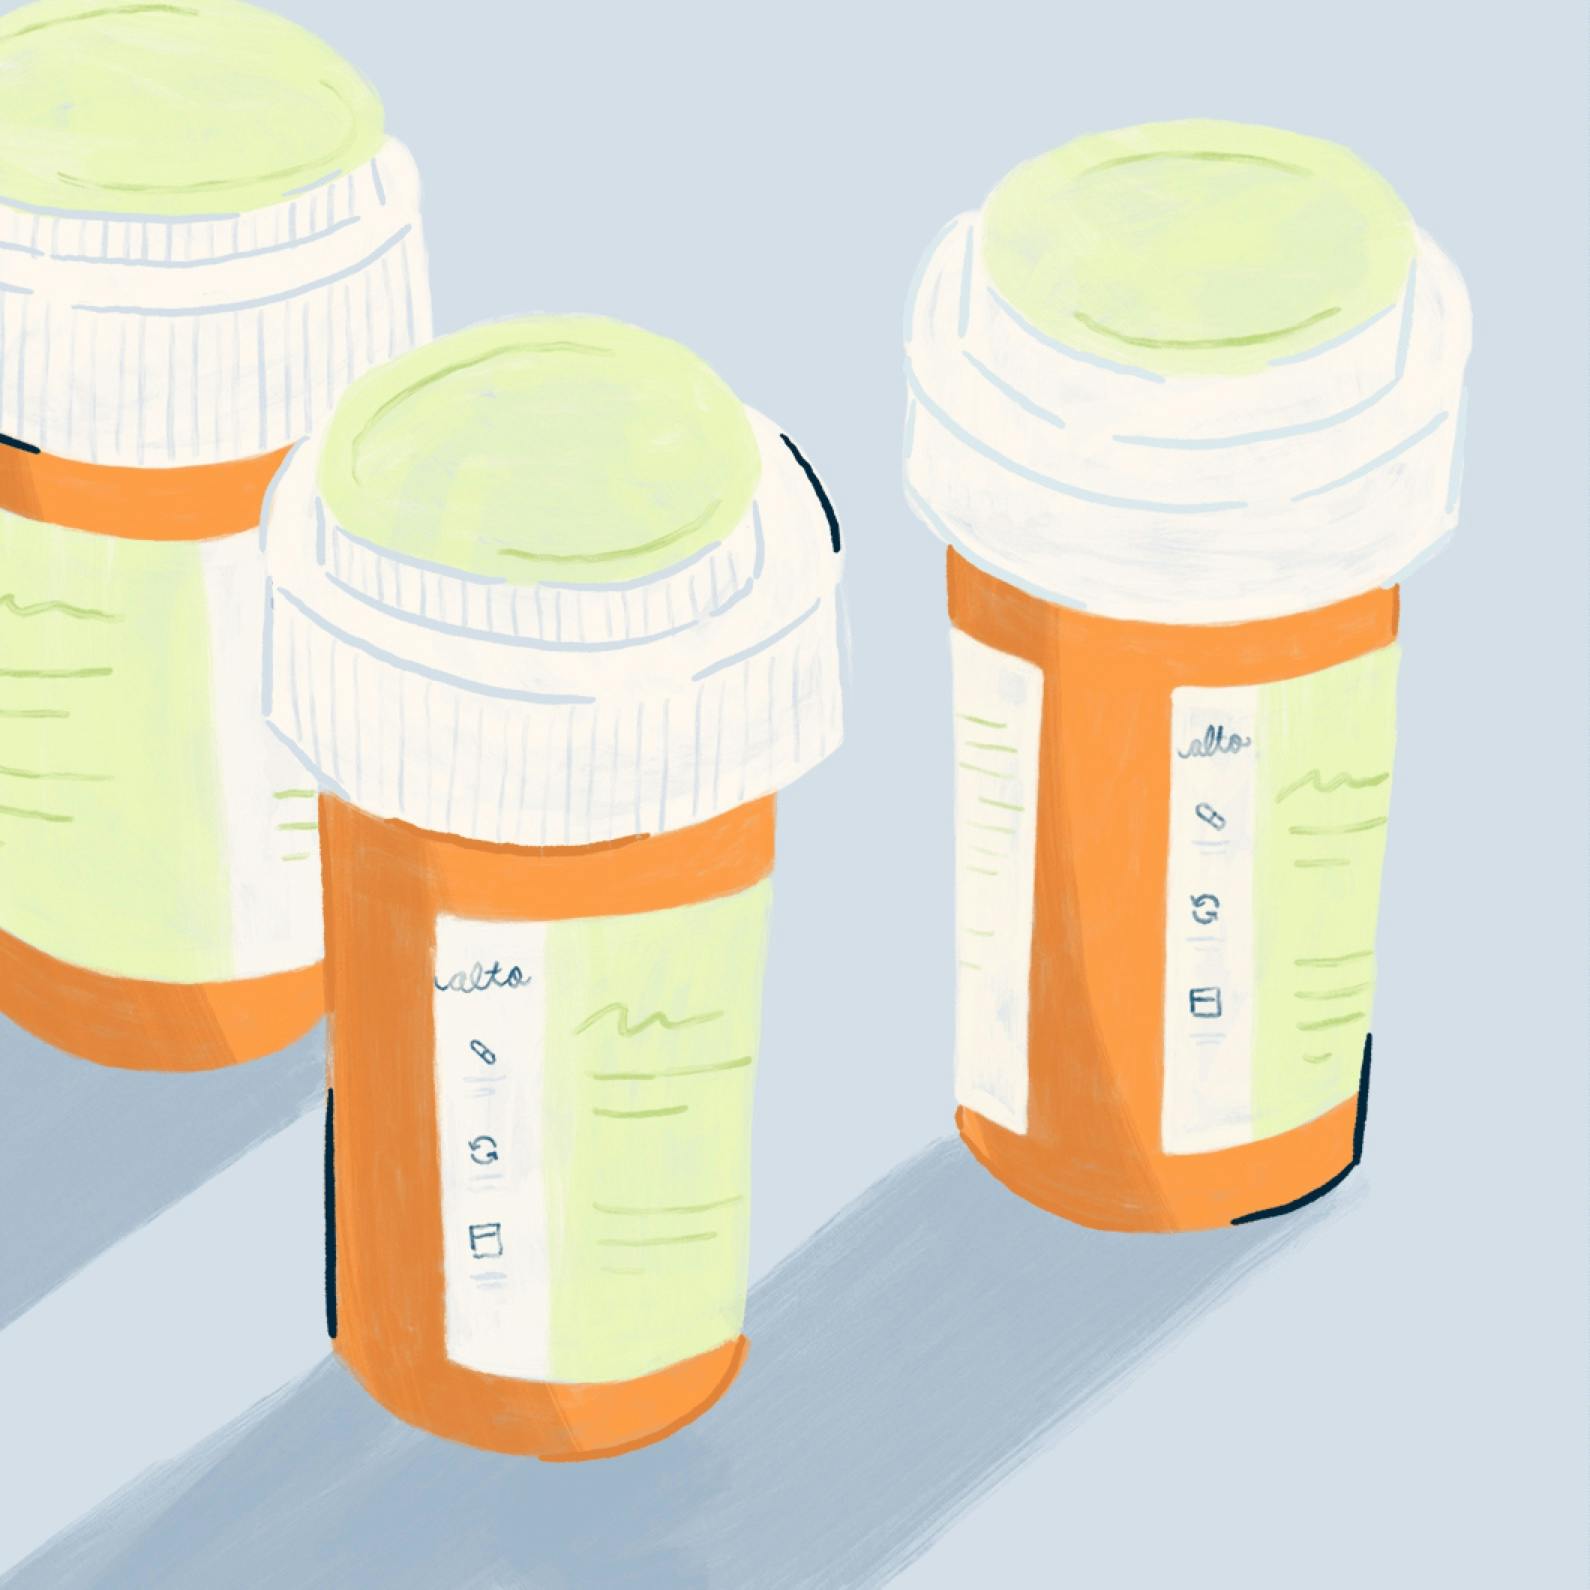 alto medicine bottles illustration